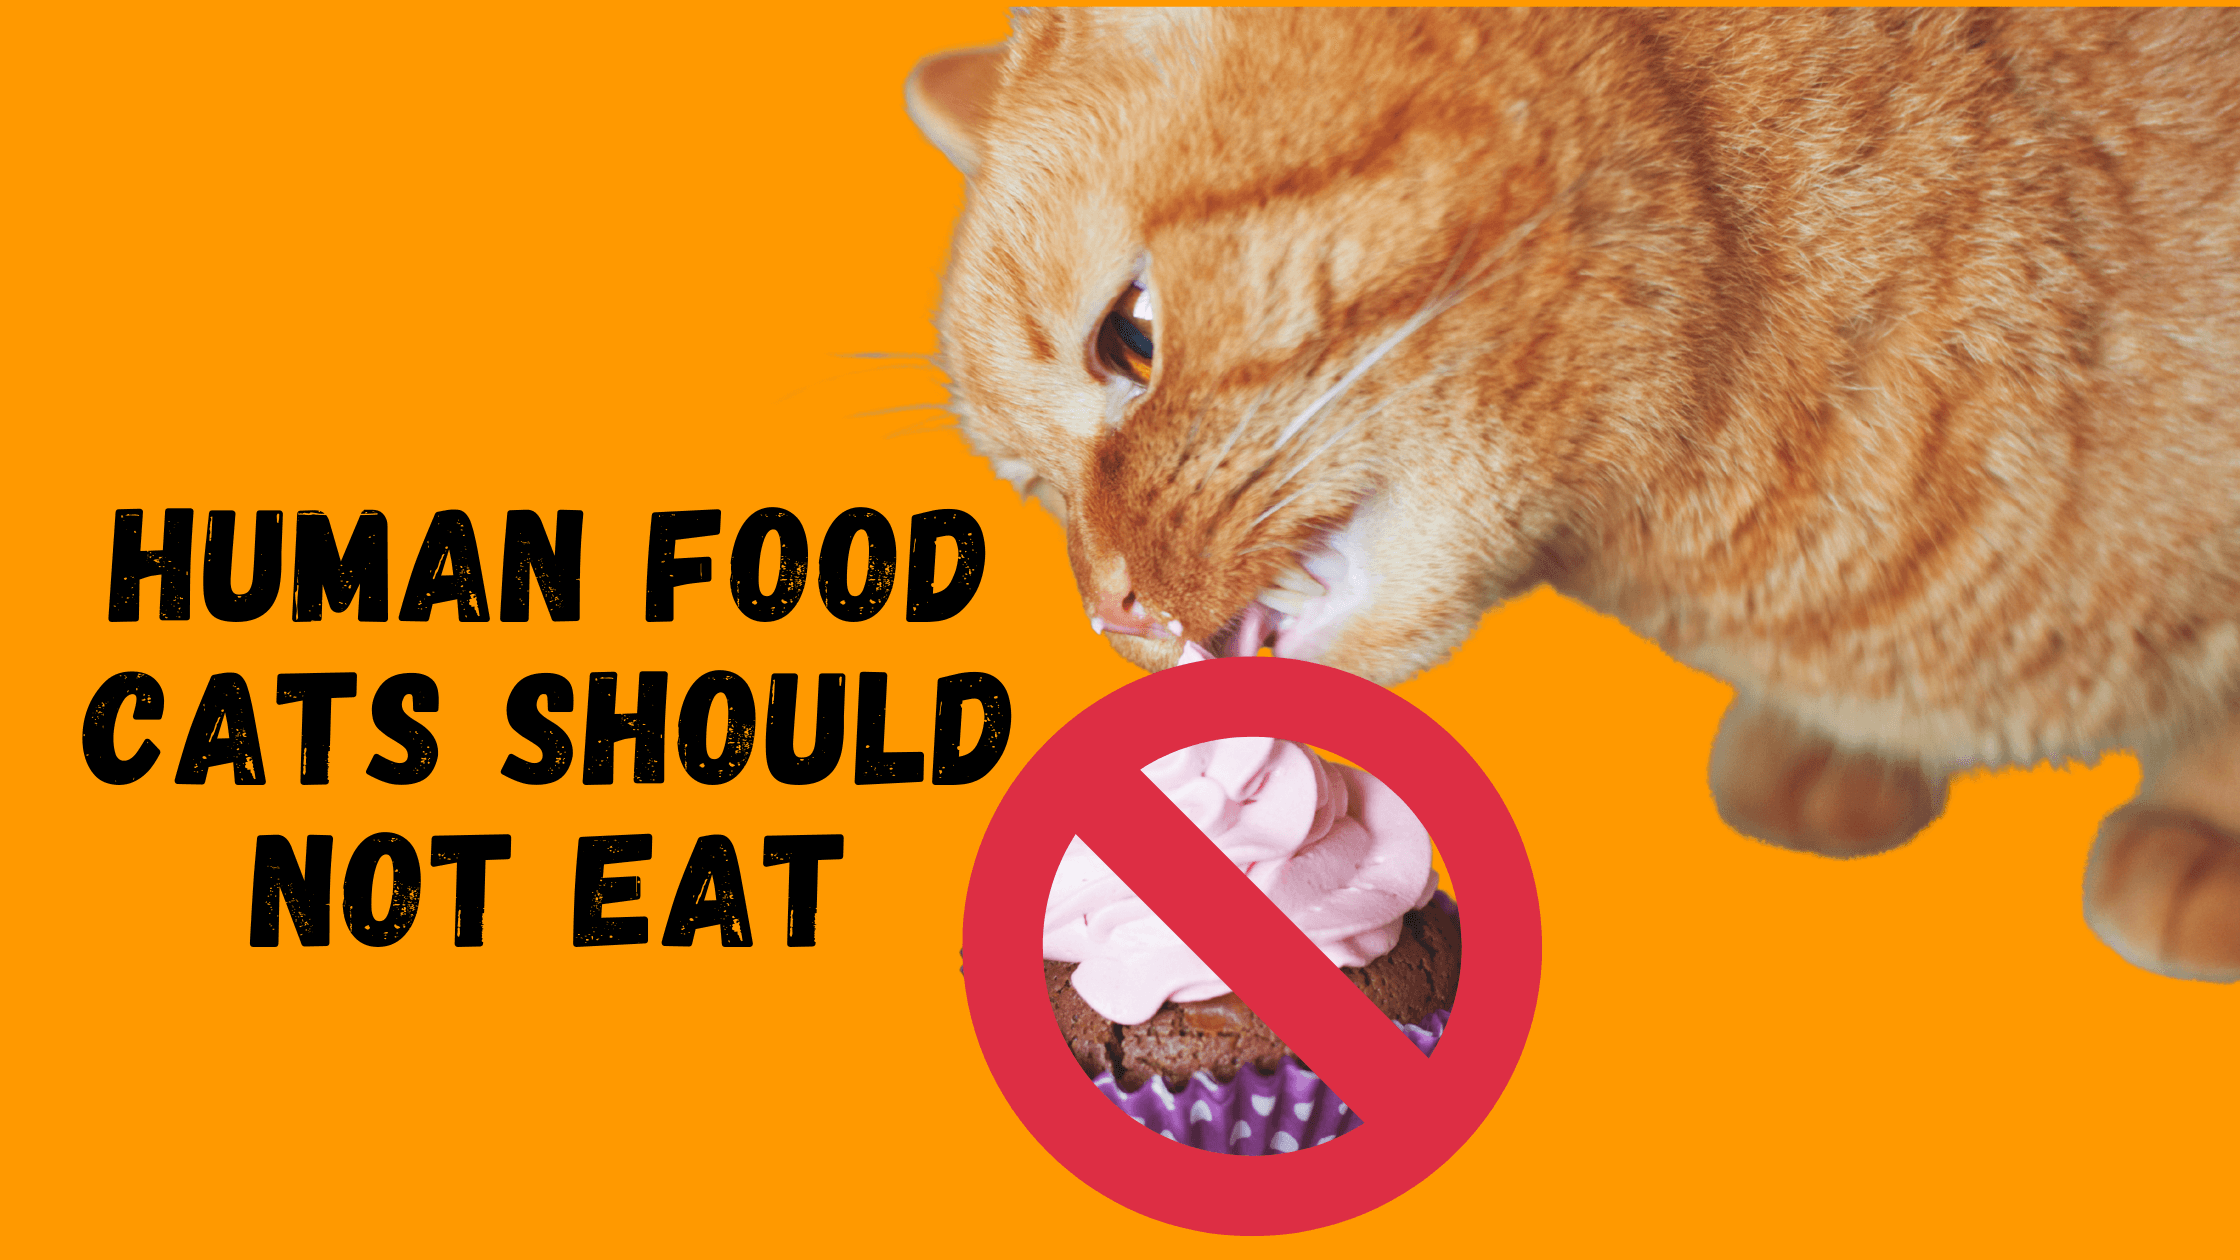 Human Food Cats Should Not Eat - KittyNook Cat Company